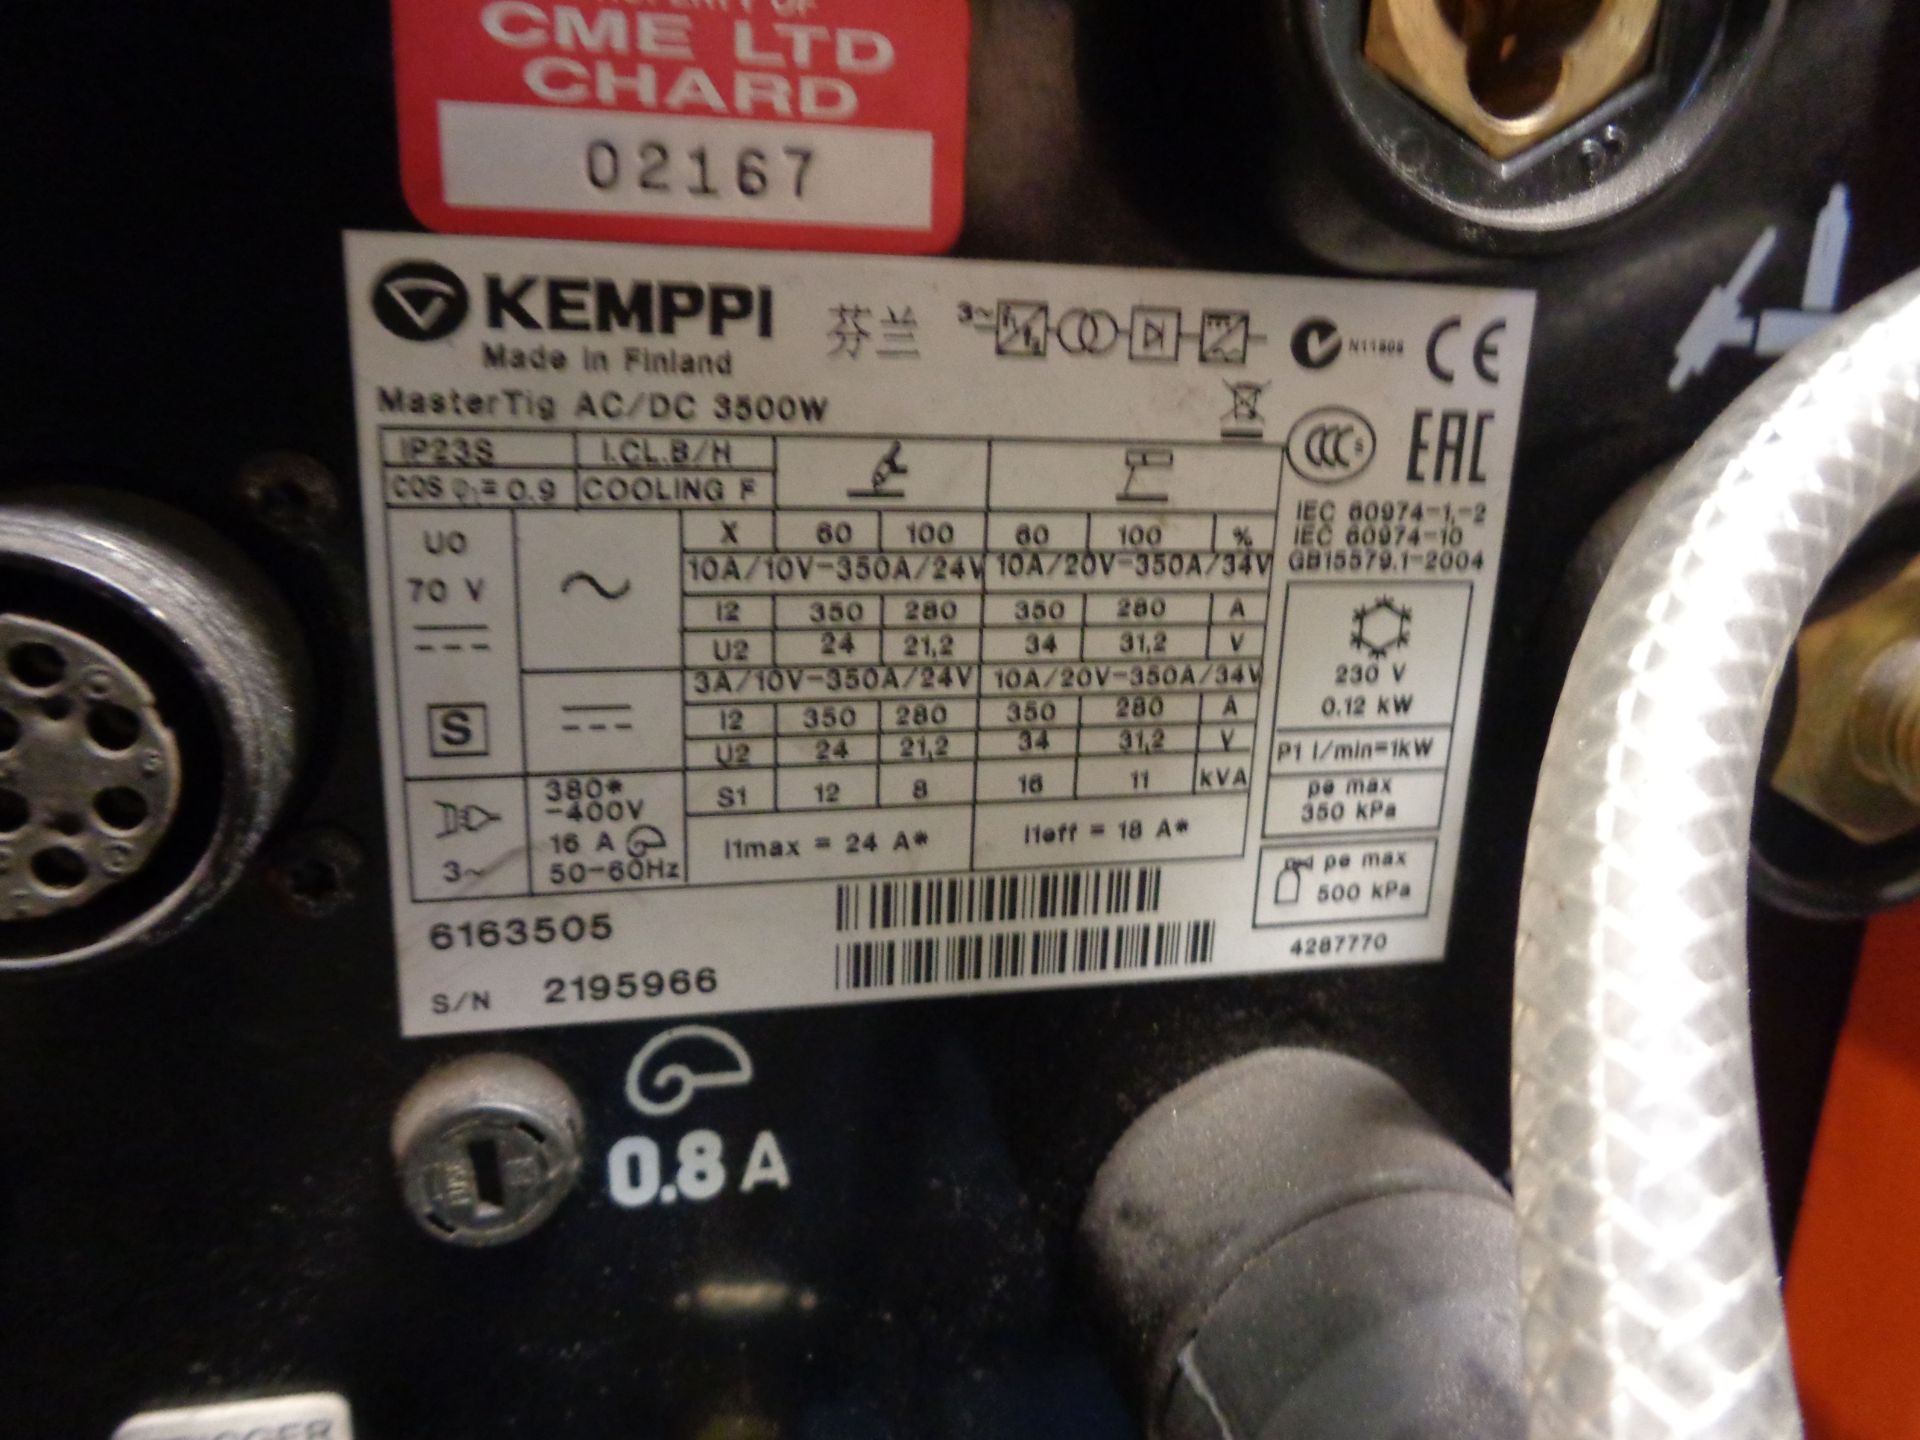 Kemppi Master Tig AC/DC 2500W tig welder serial no. 2195966 - Image 4 of 5